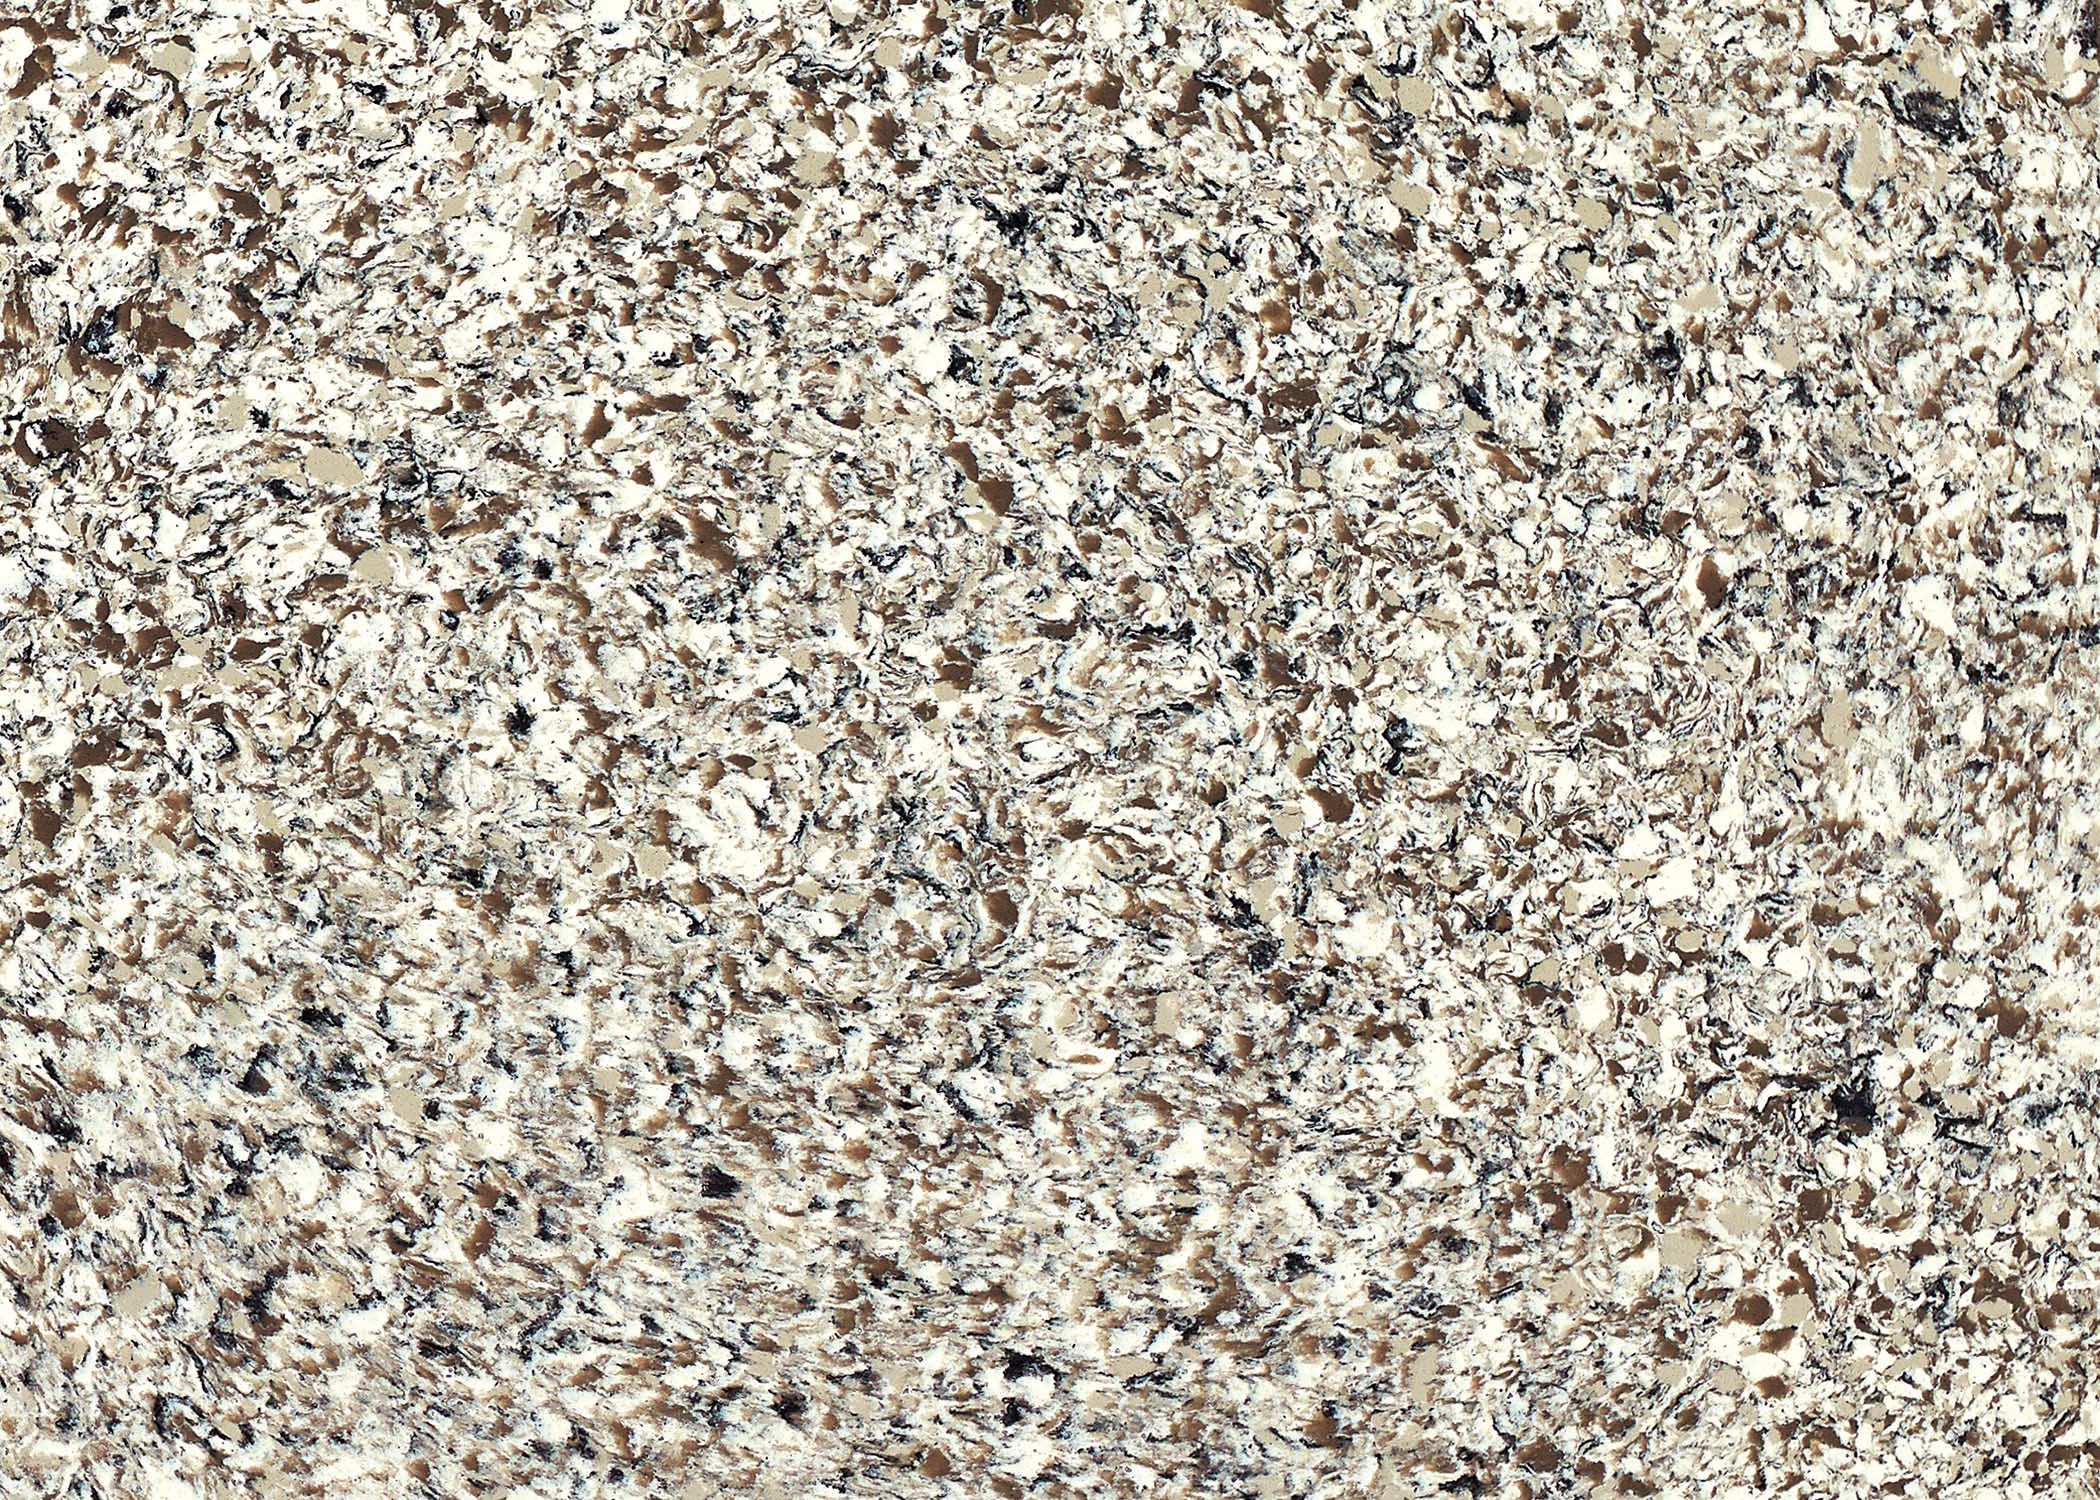 Quartz Stone Slab